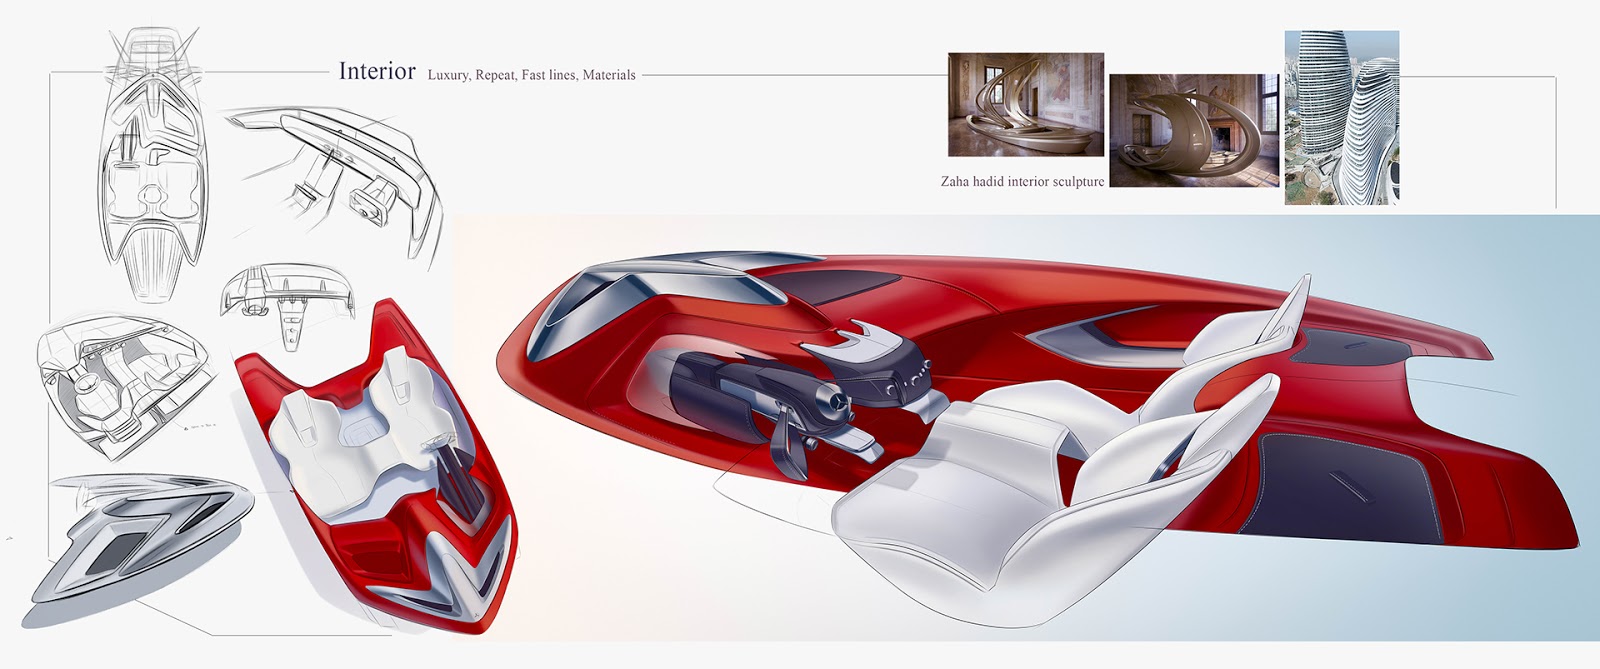 Mercedes-Hybrid-Supercar-Concept-6.jpg